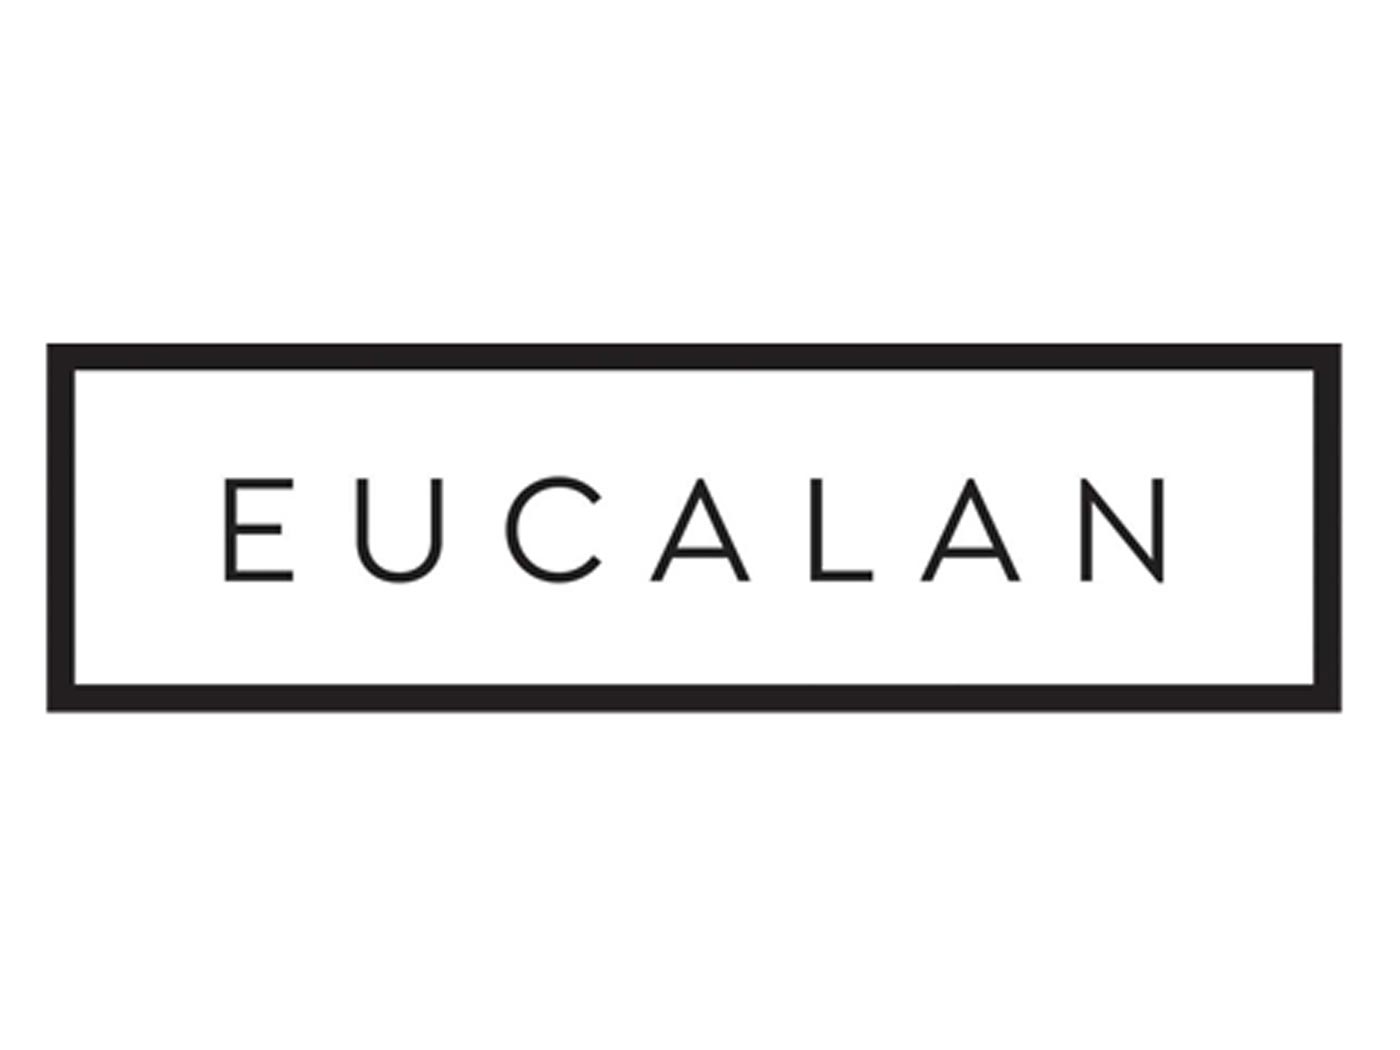 Eucalan Wrapture Blog Tour